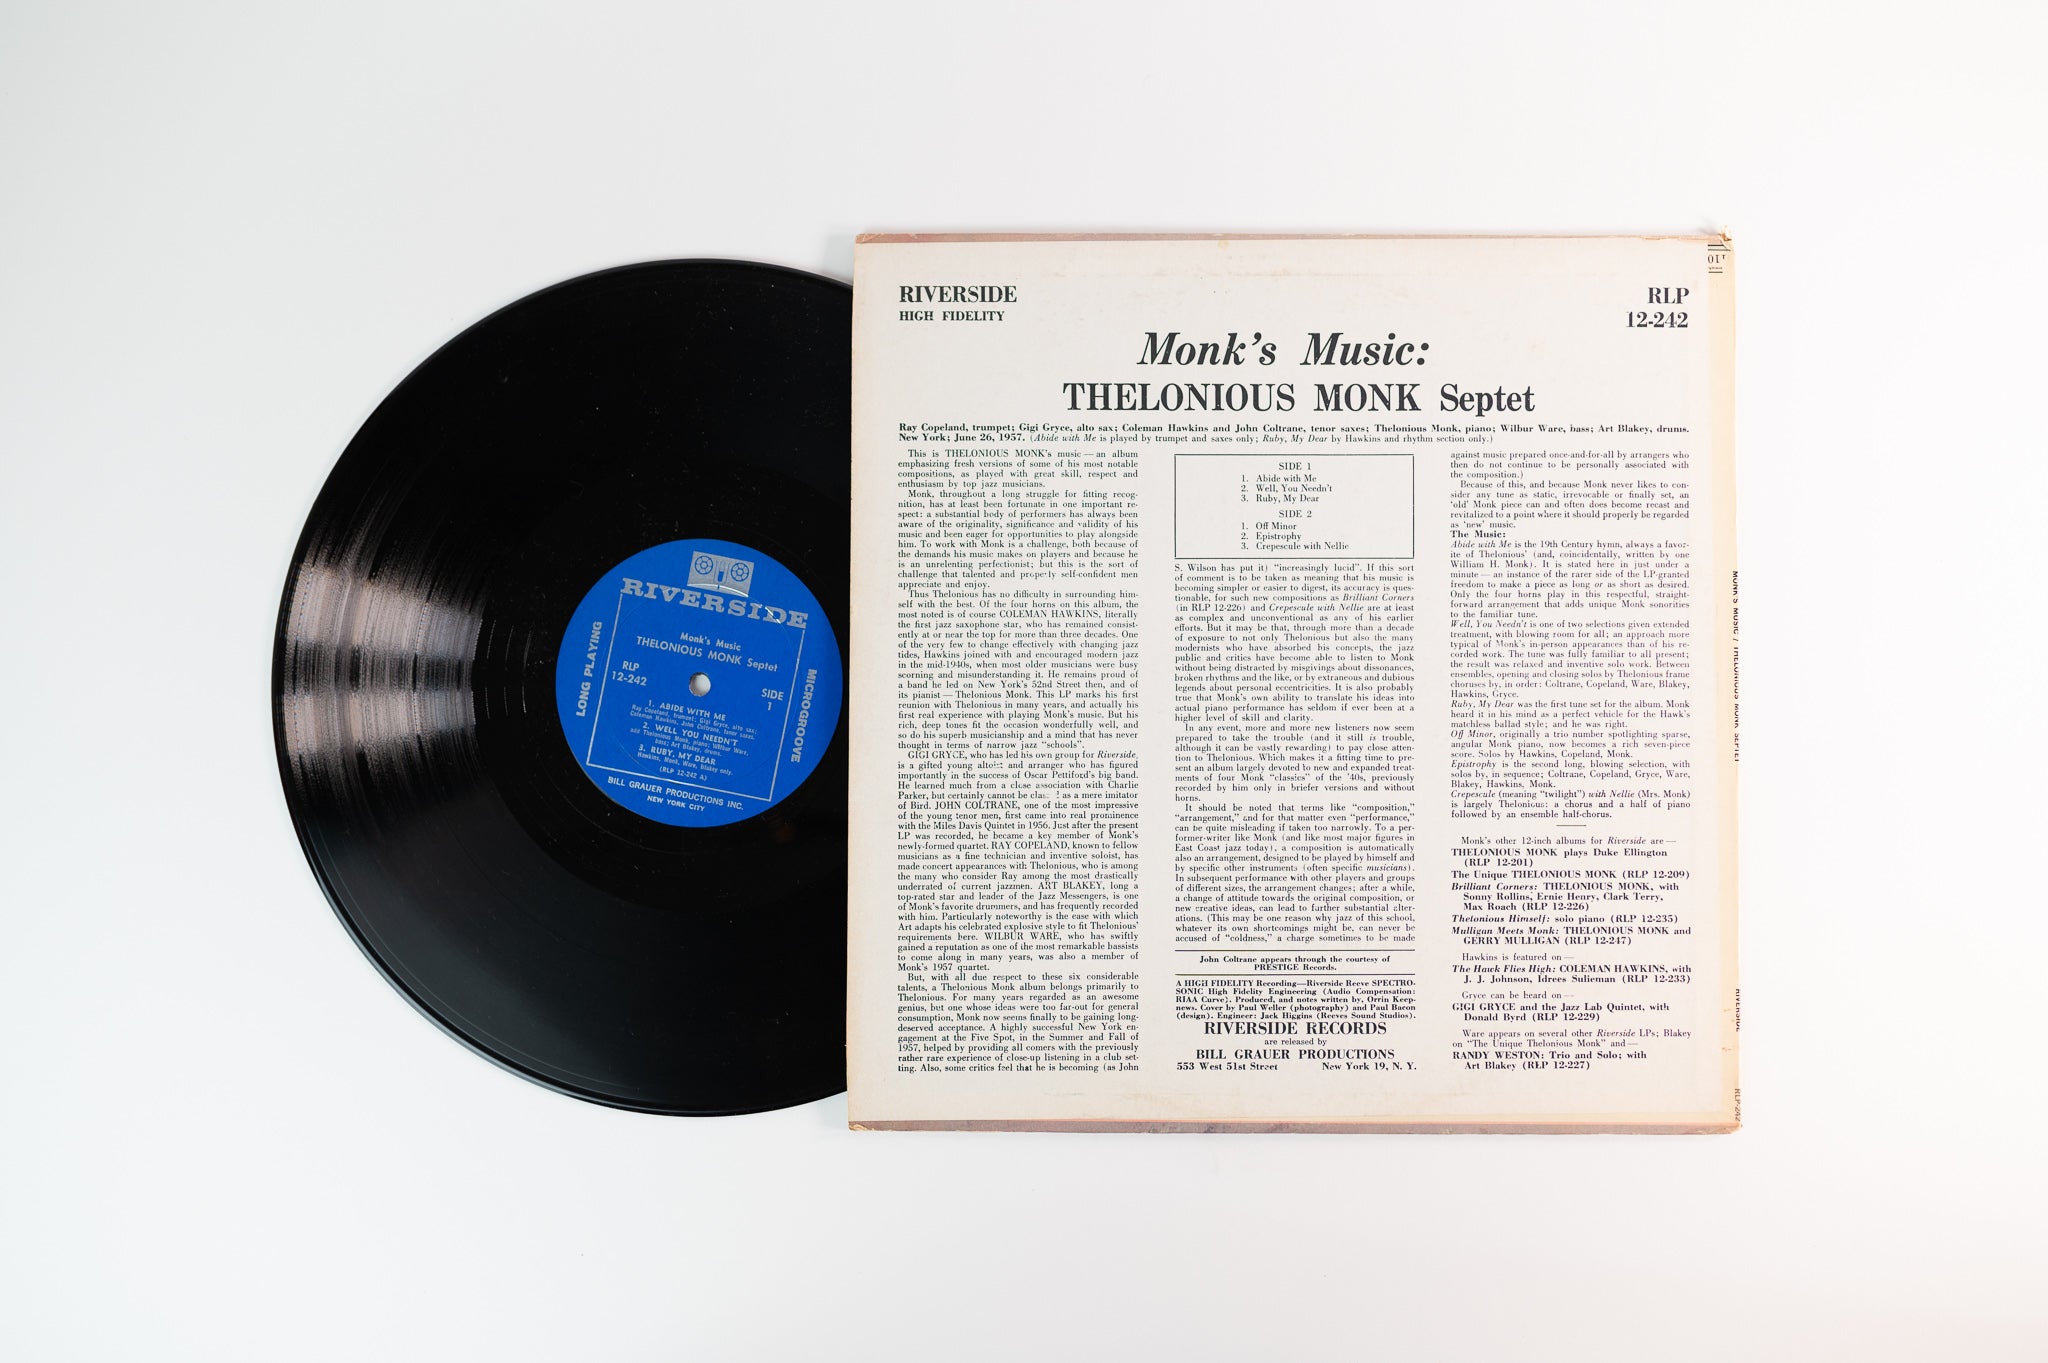 Thelonious Monk Septet - Monk's Music on Riverside Mono Reissue